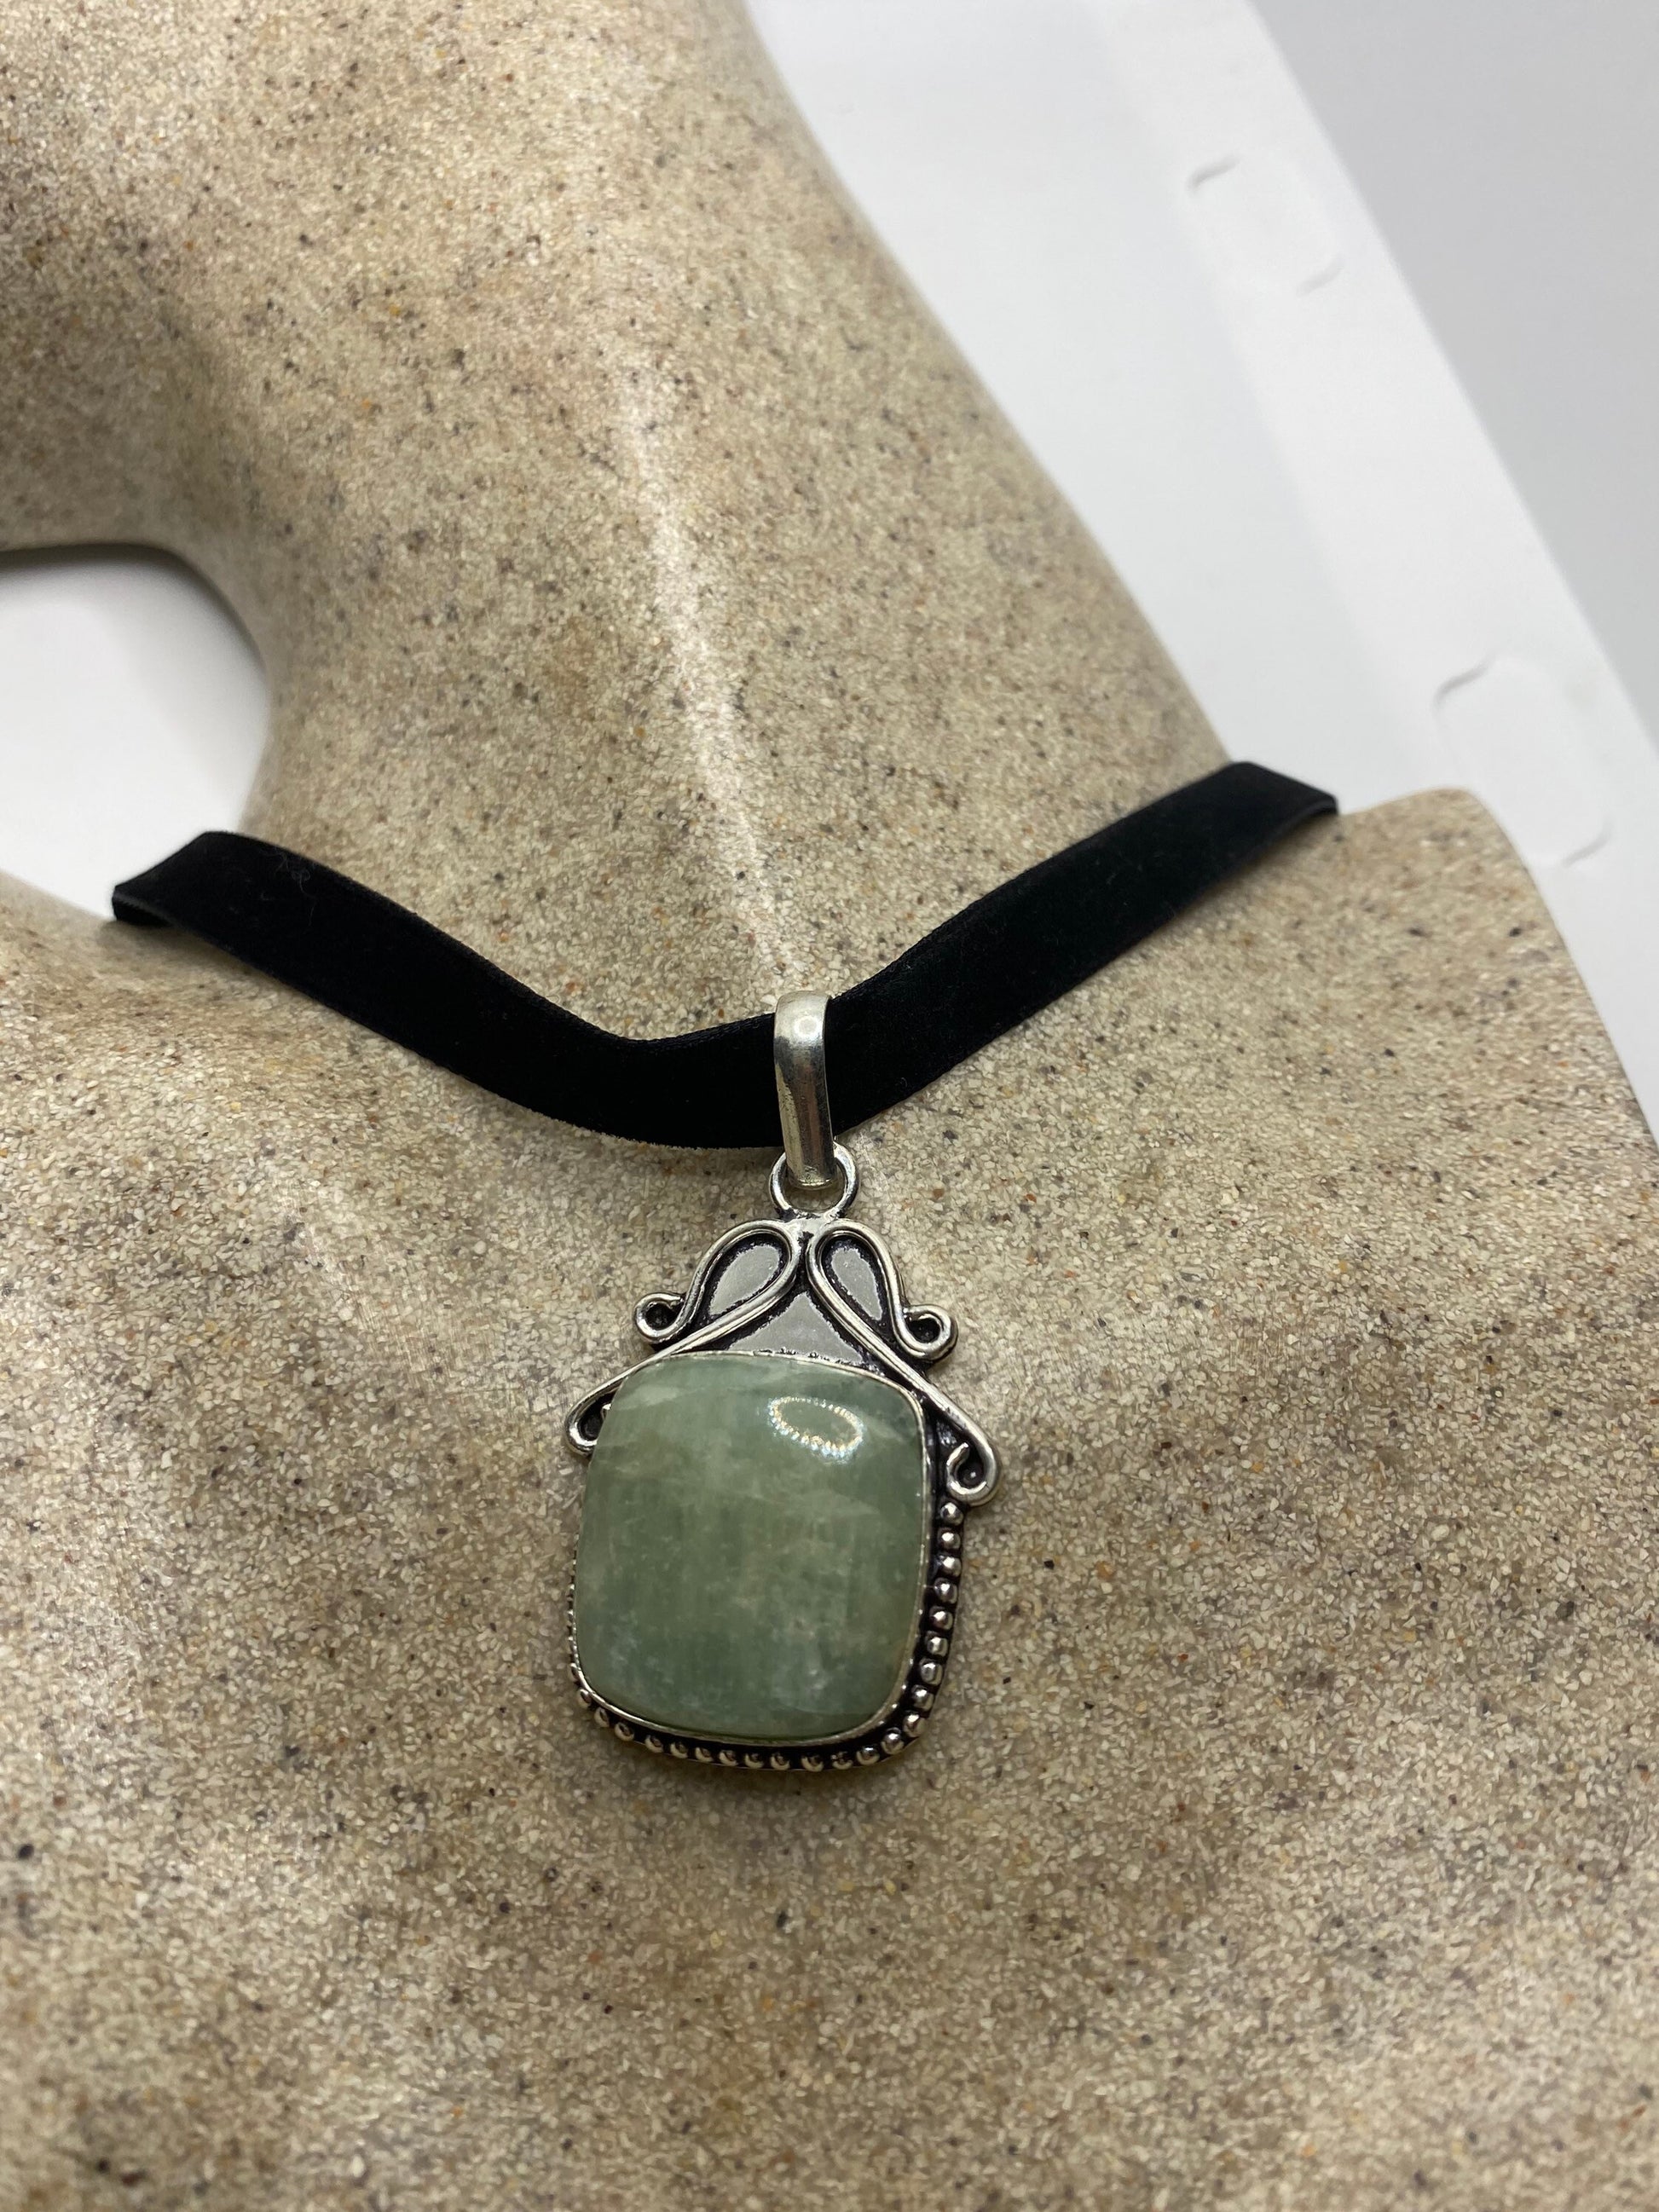 Vintage Green Aventurine Crystal Choker Pendant Necklace